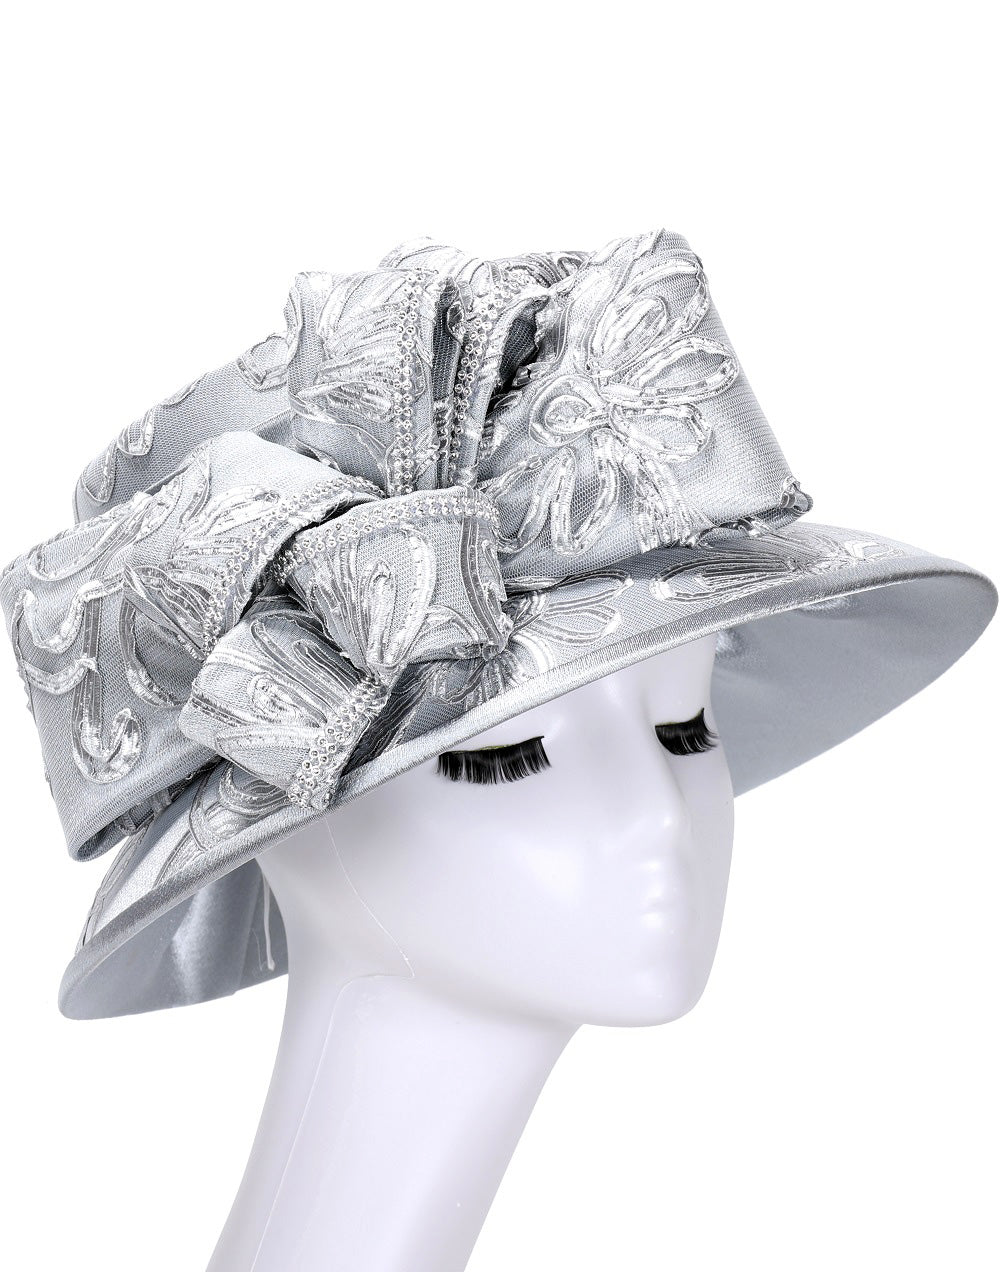 Giovanna Church Hat HD1561-Silver - Church Suits For Less